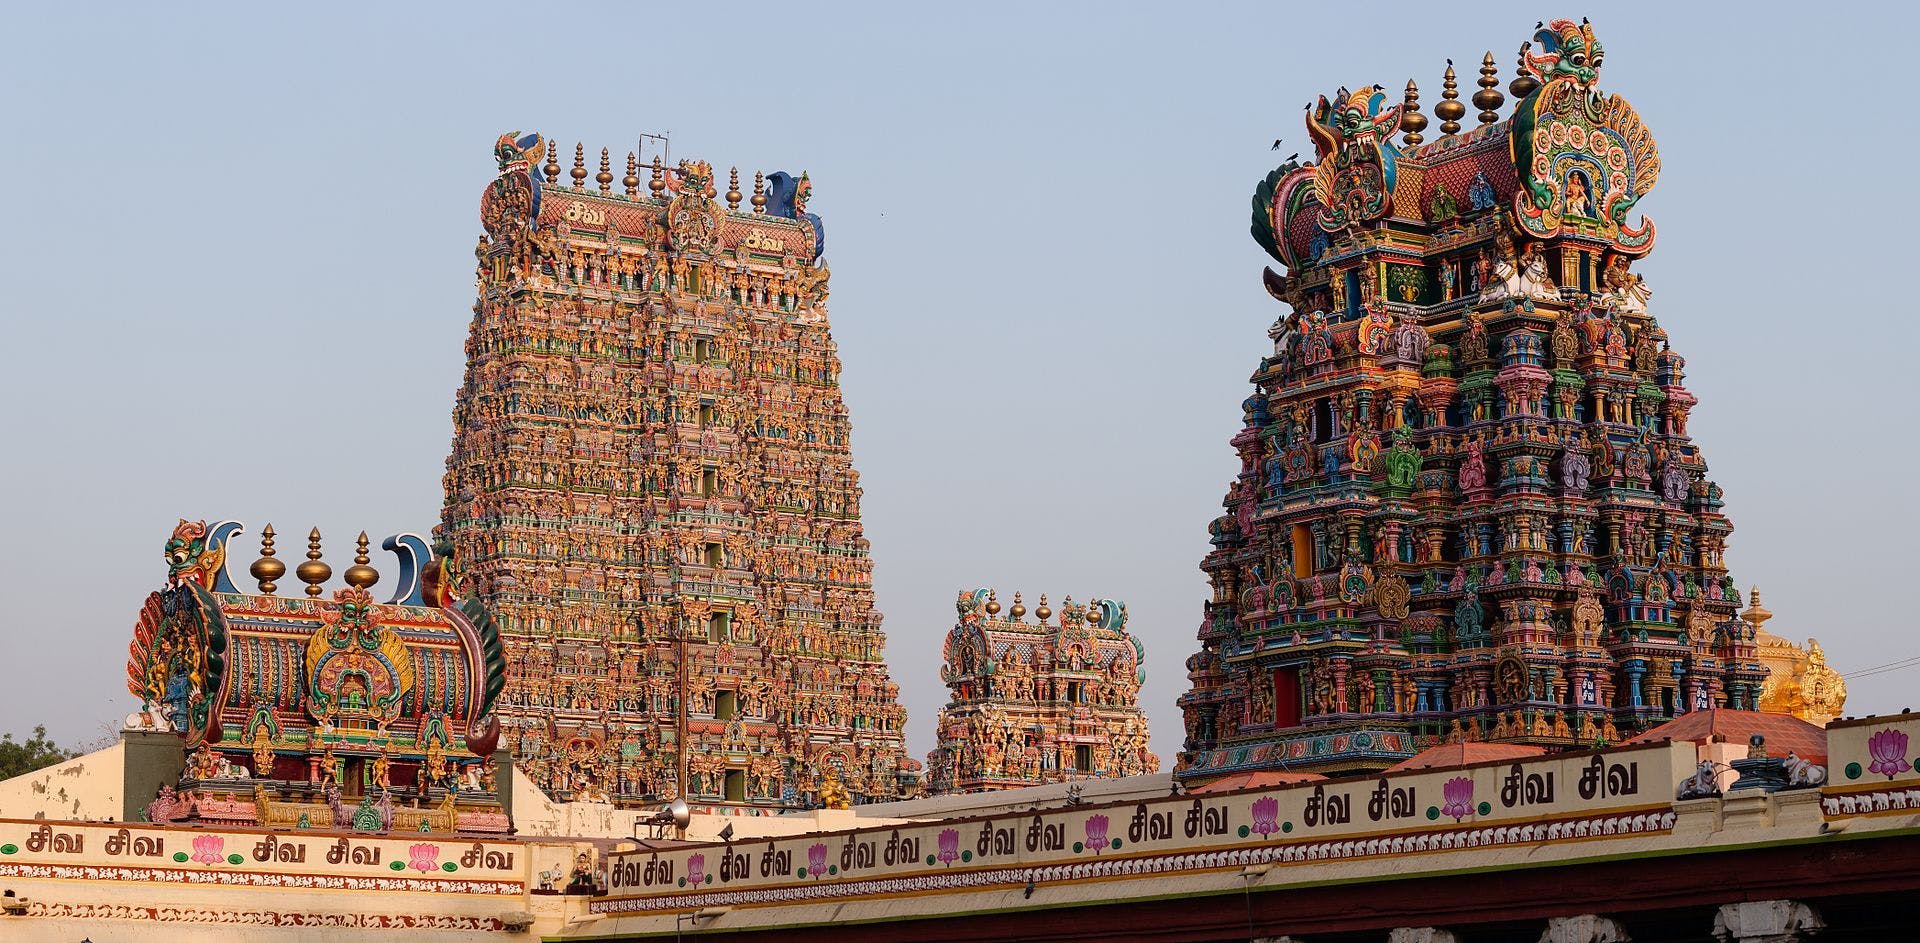 Meenakshi temple has 14 colorful gopuras